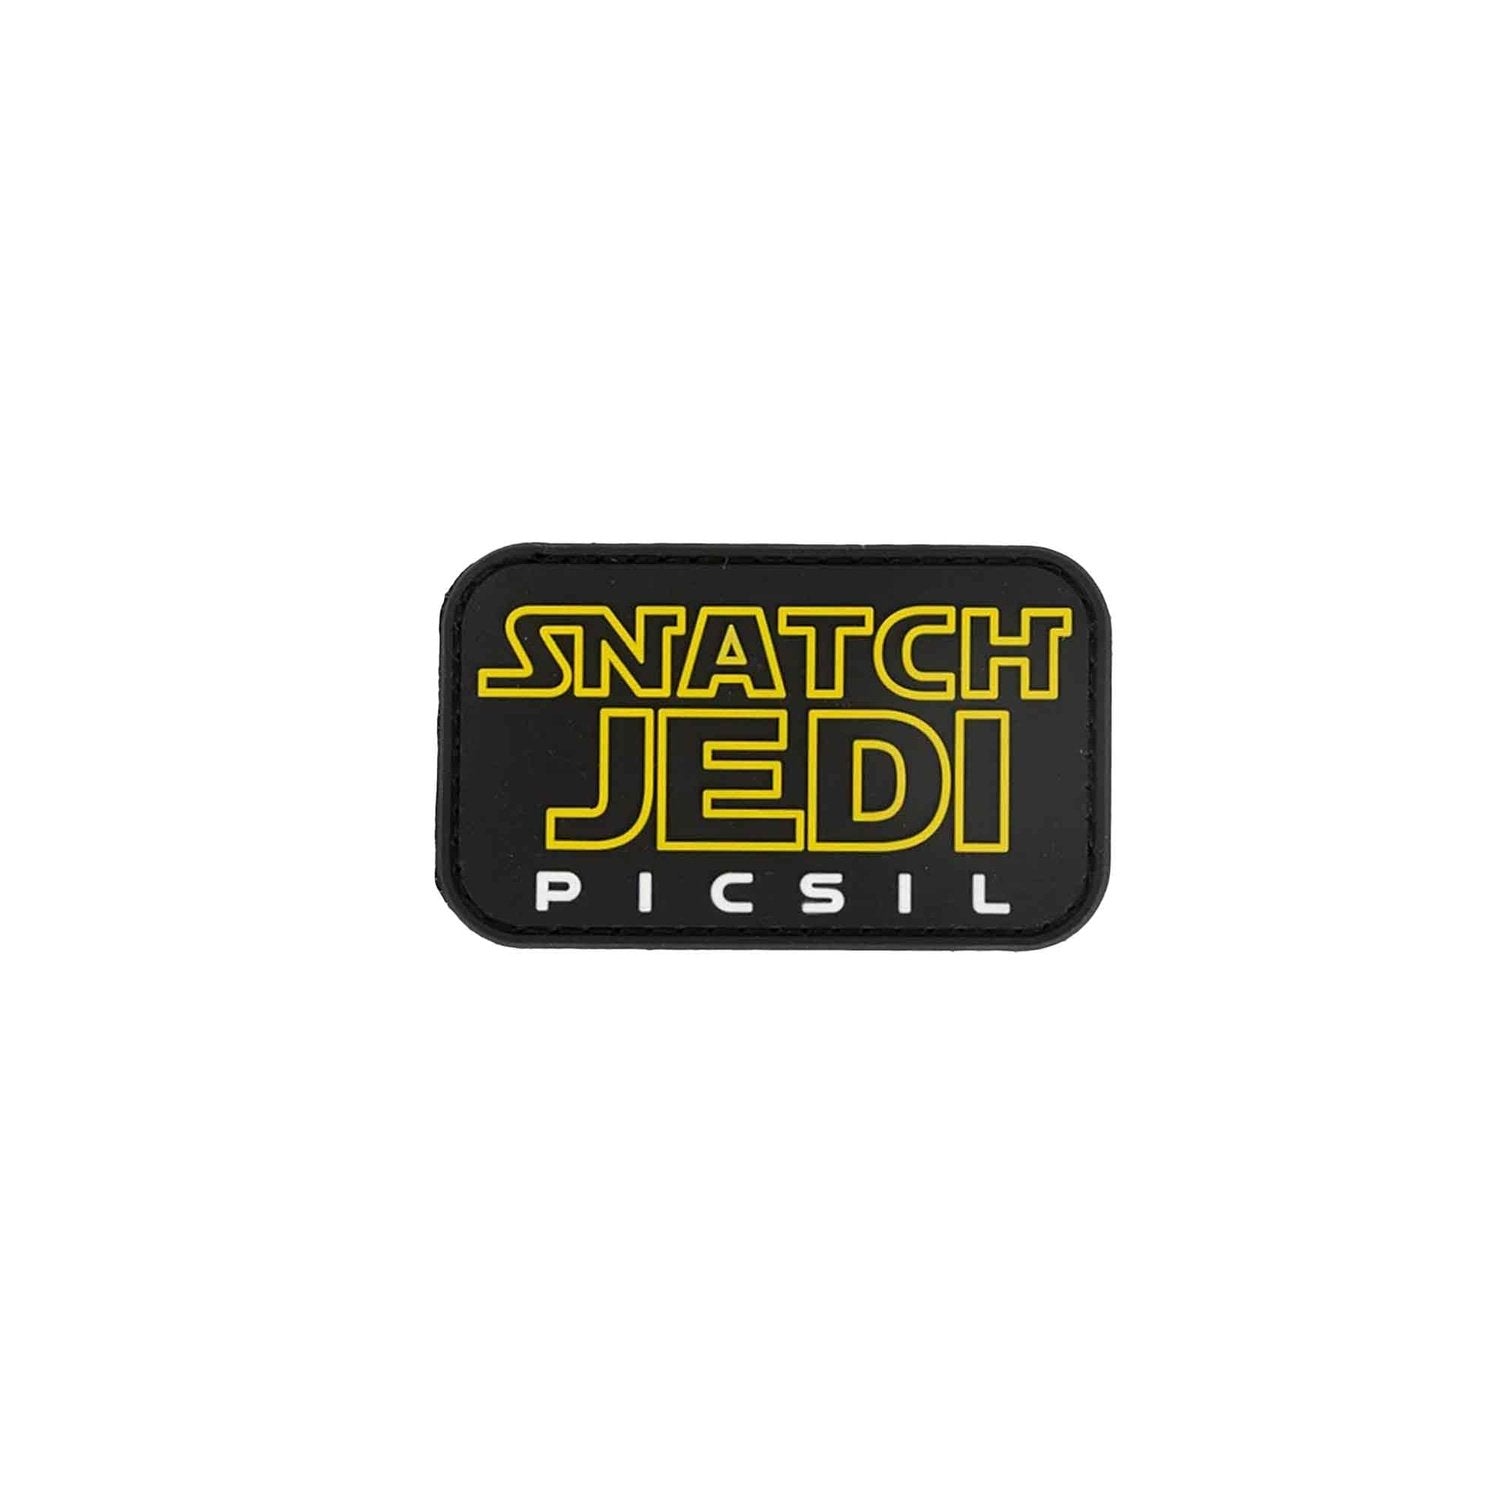 PicSil Velcro Patch "Snatch Jedi" kaufen bei HighPowered.ch